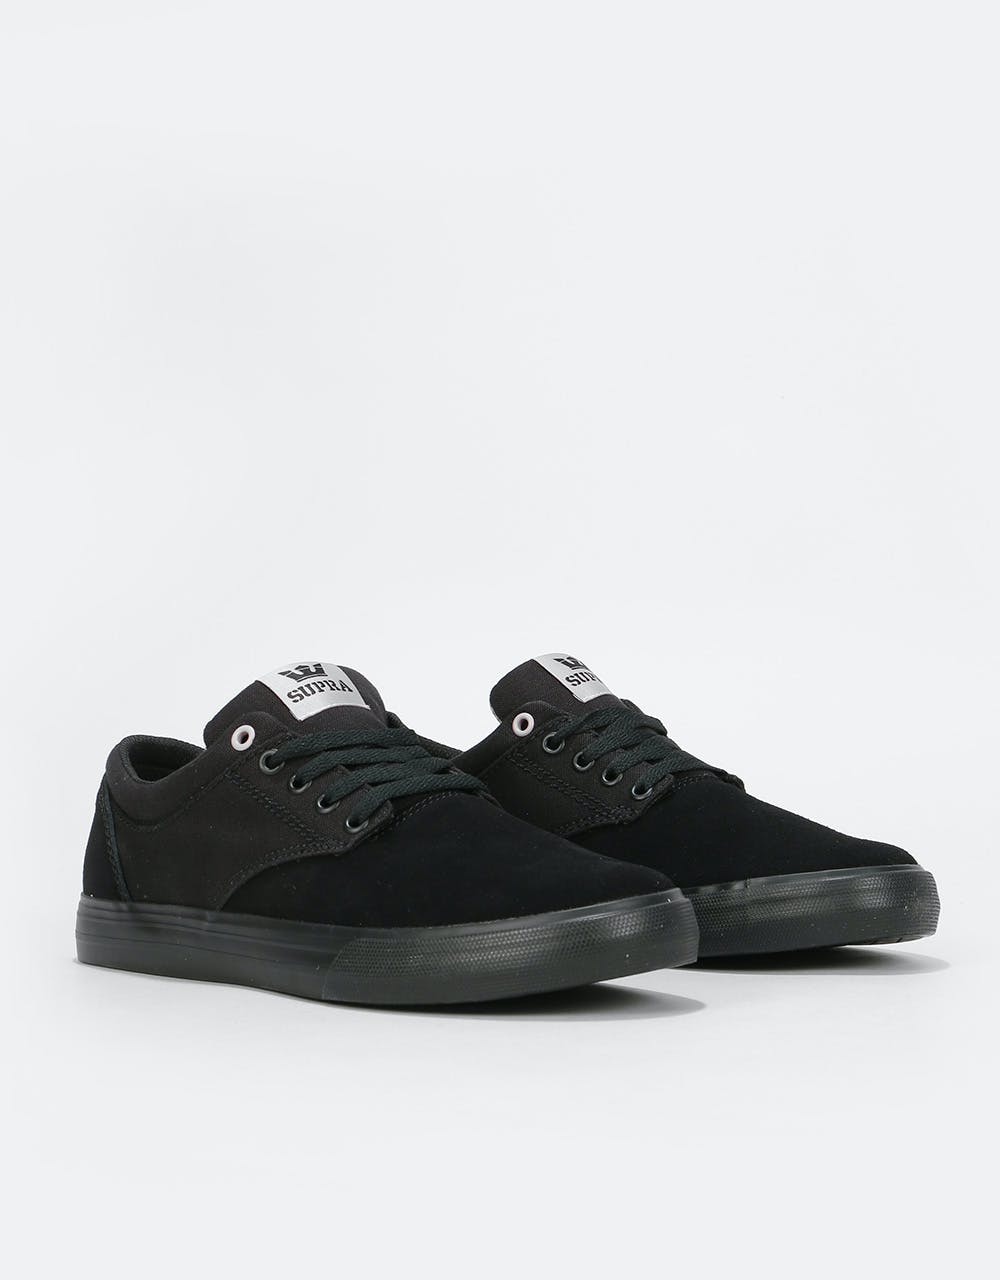 Supra Chino Skate Shoes - Black/Mauve-Black